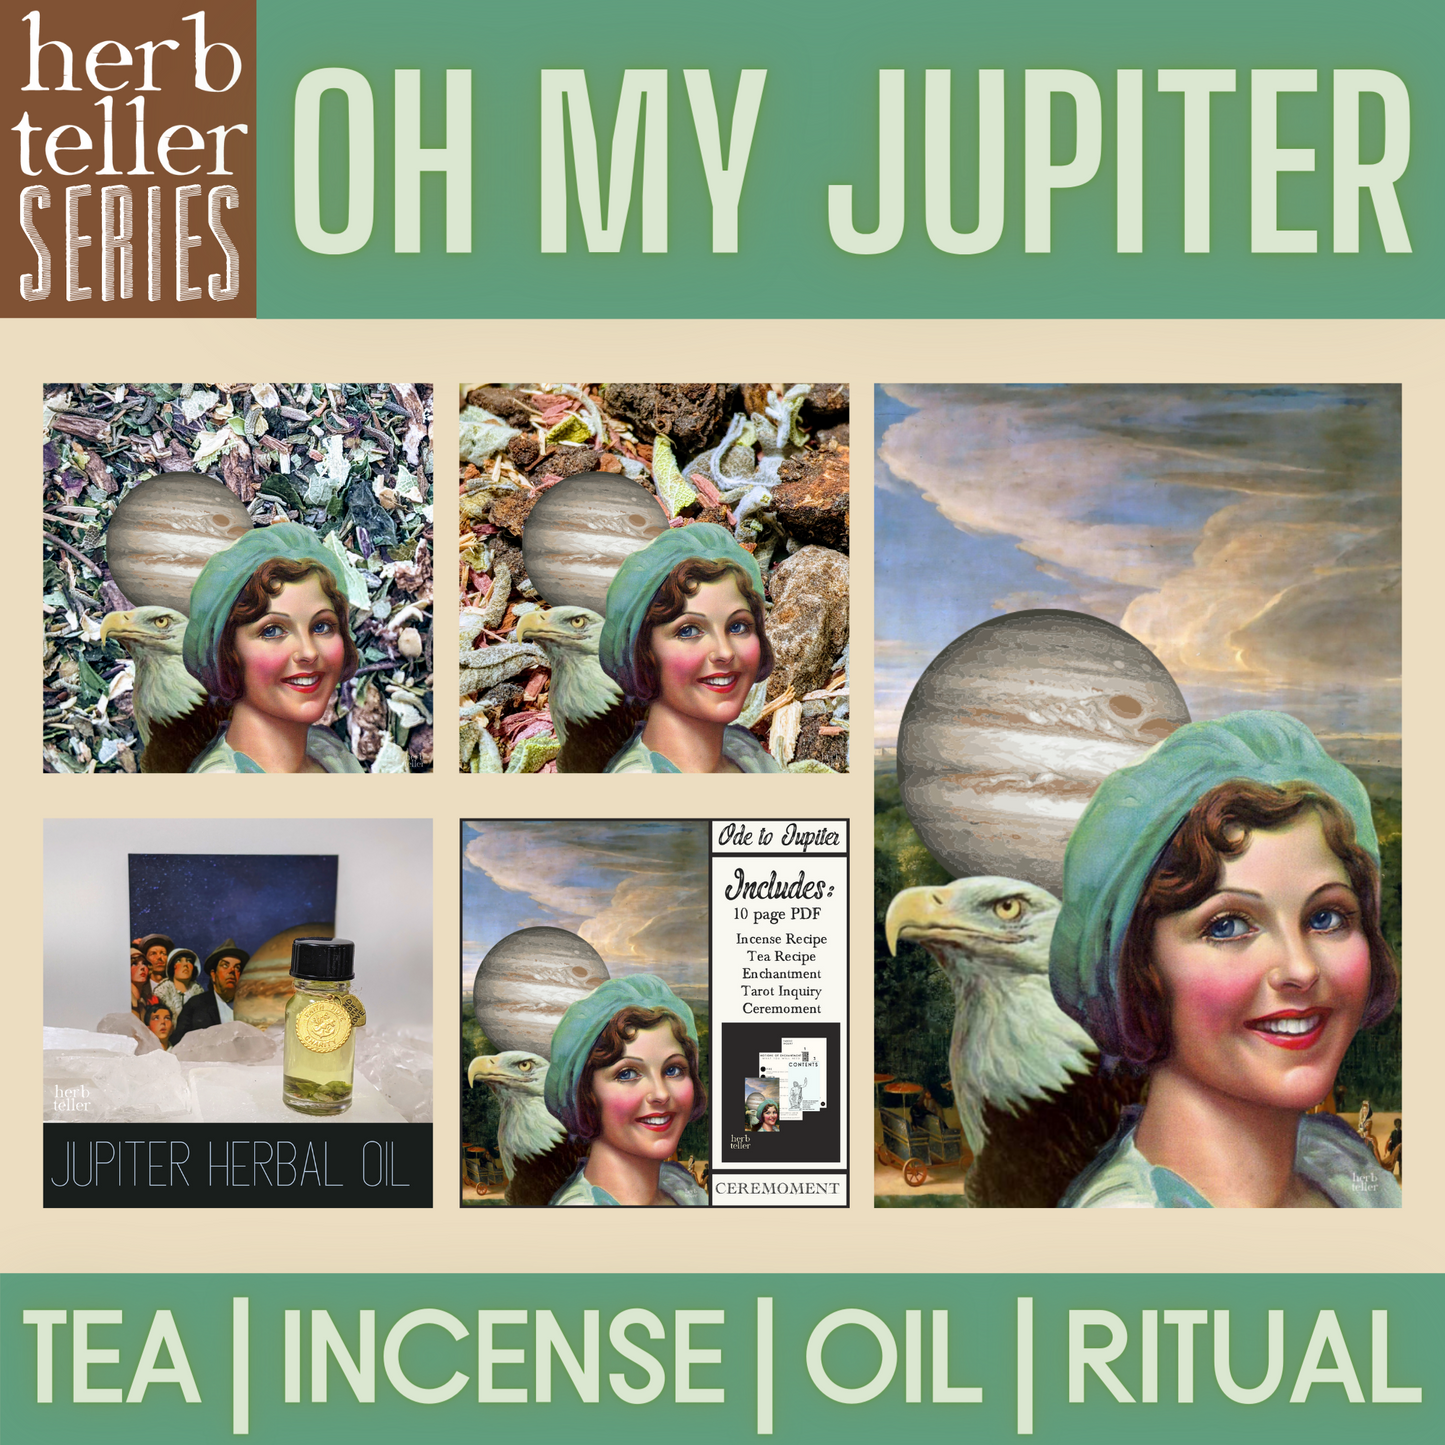 Jupiter Herbal Tea/Infusion (Herbtention)